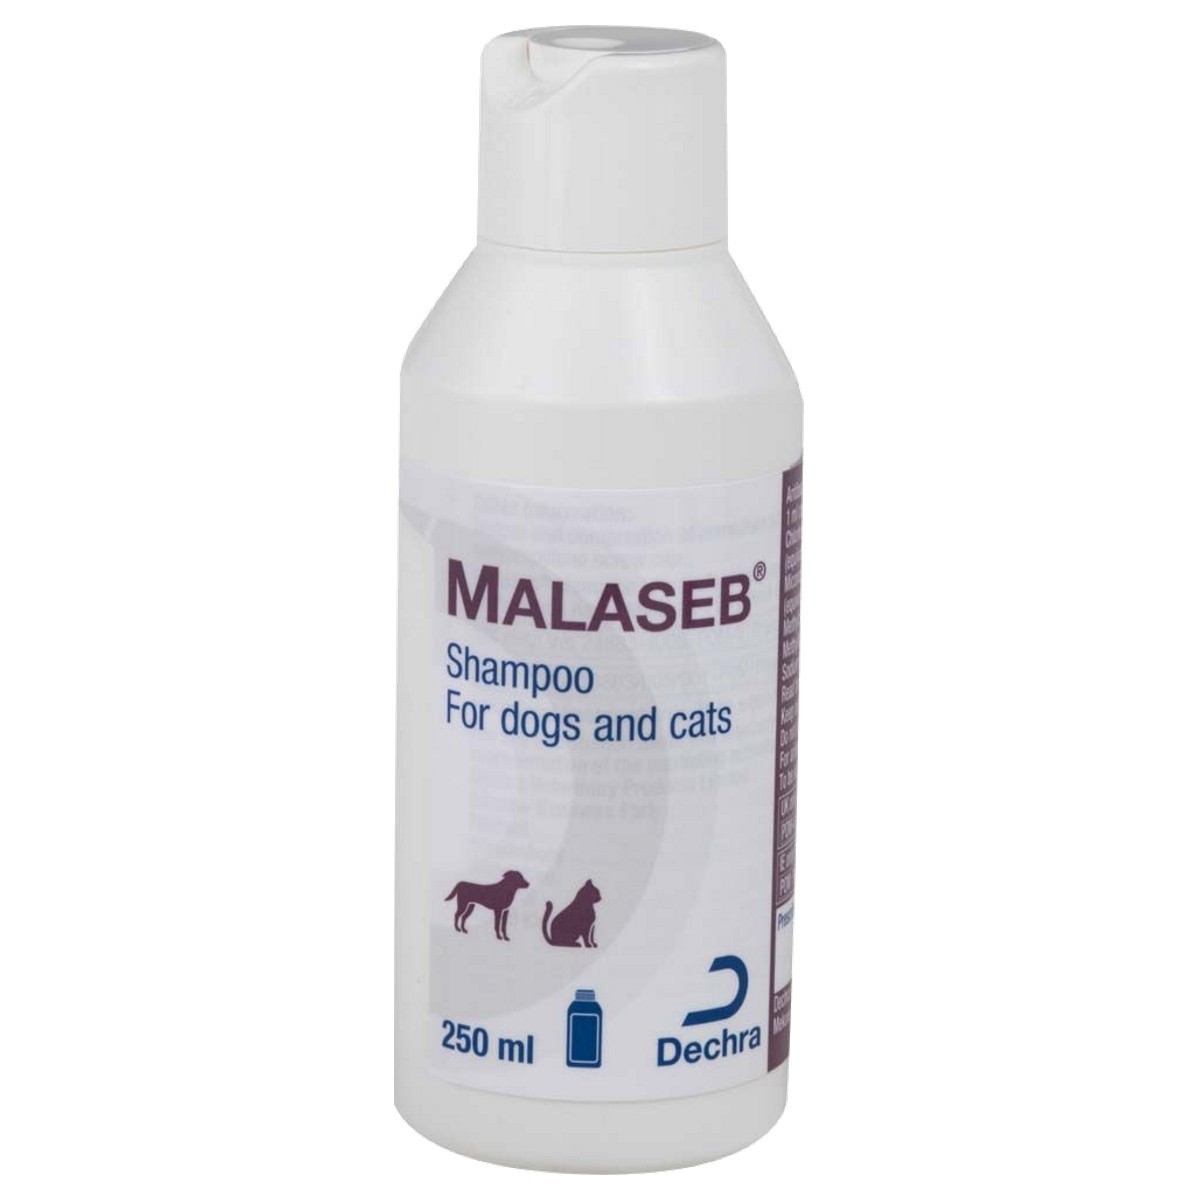 malaseb for horses